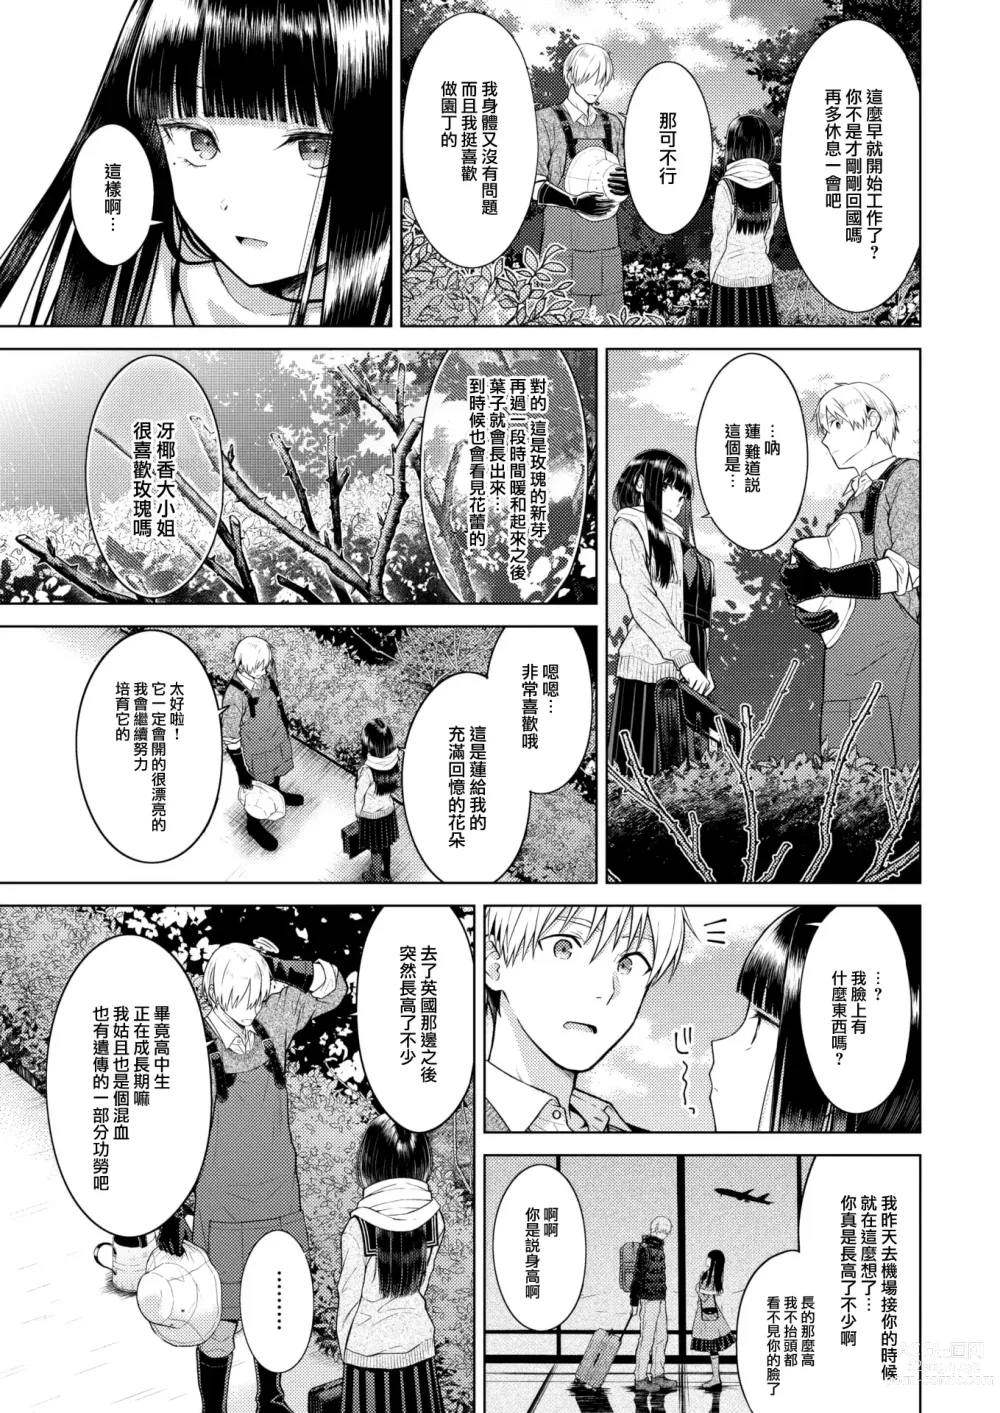 Page 4 of manga Garden of EDEN